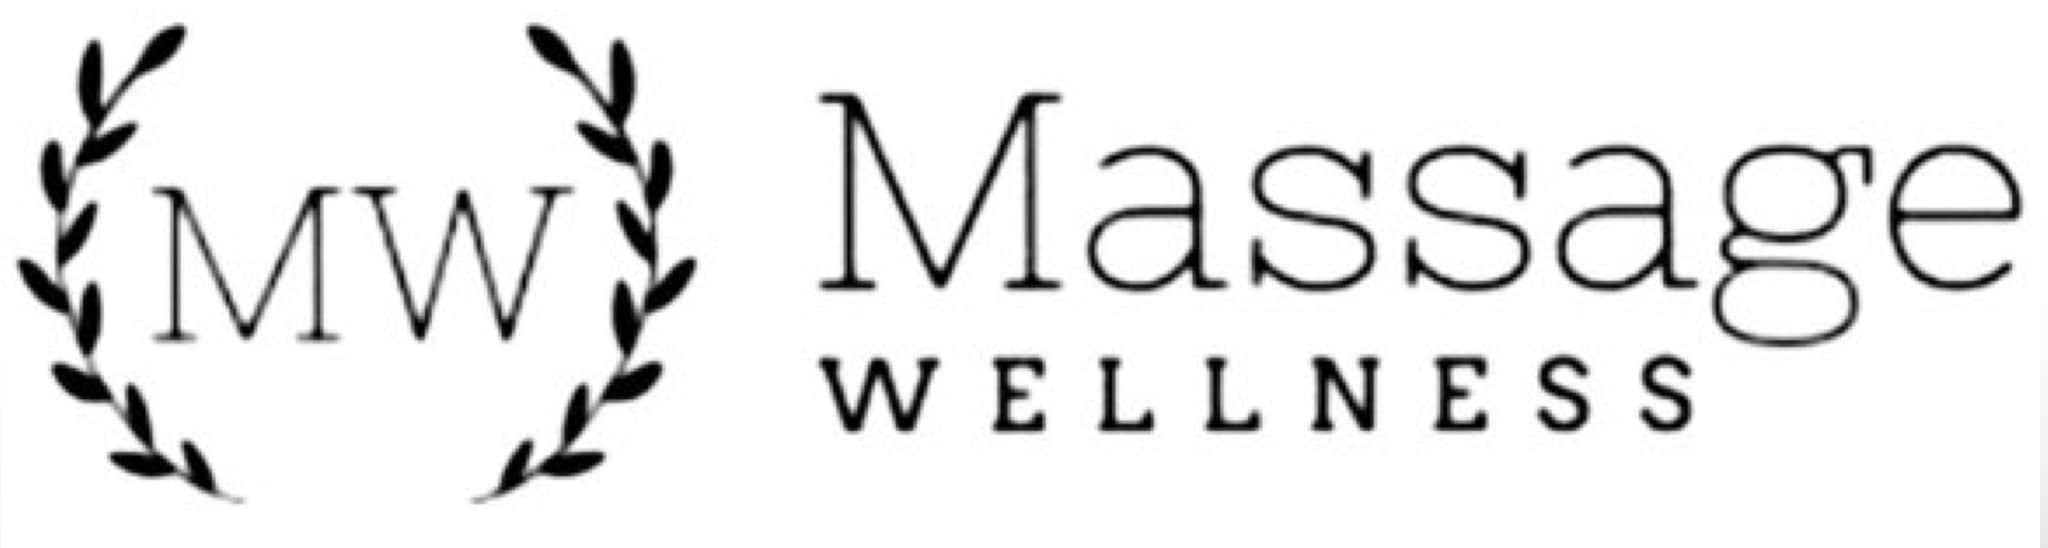 Massage wellness logo